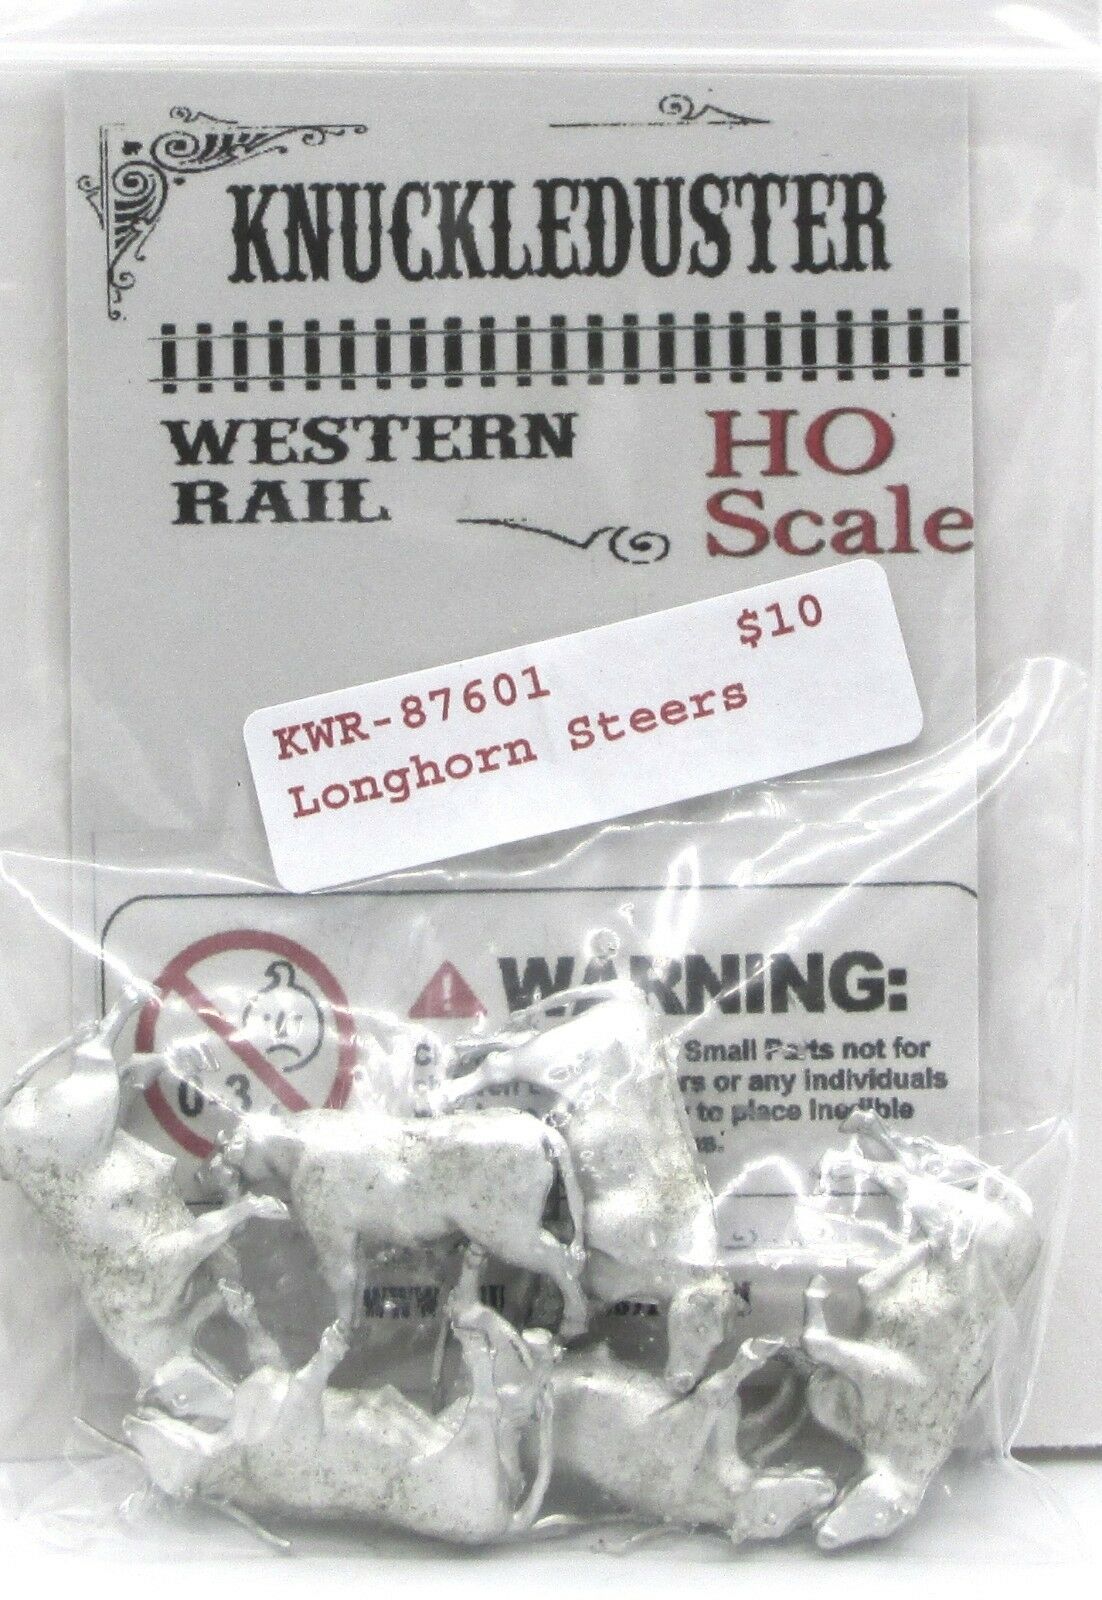 Knuckleduster Kwr-87601 Longhorn Steers (ho Scale) Old West Cattle Western Rail